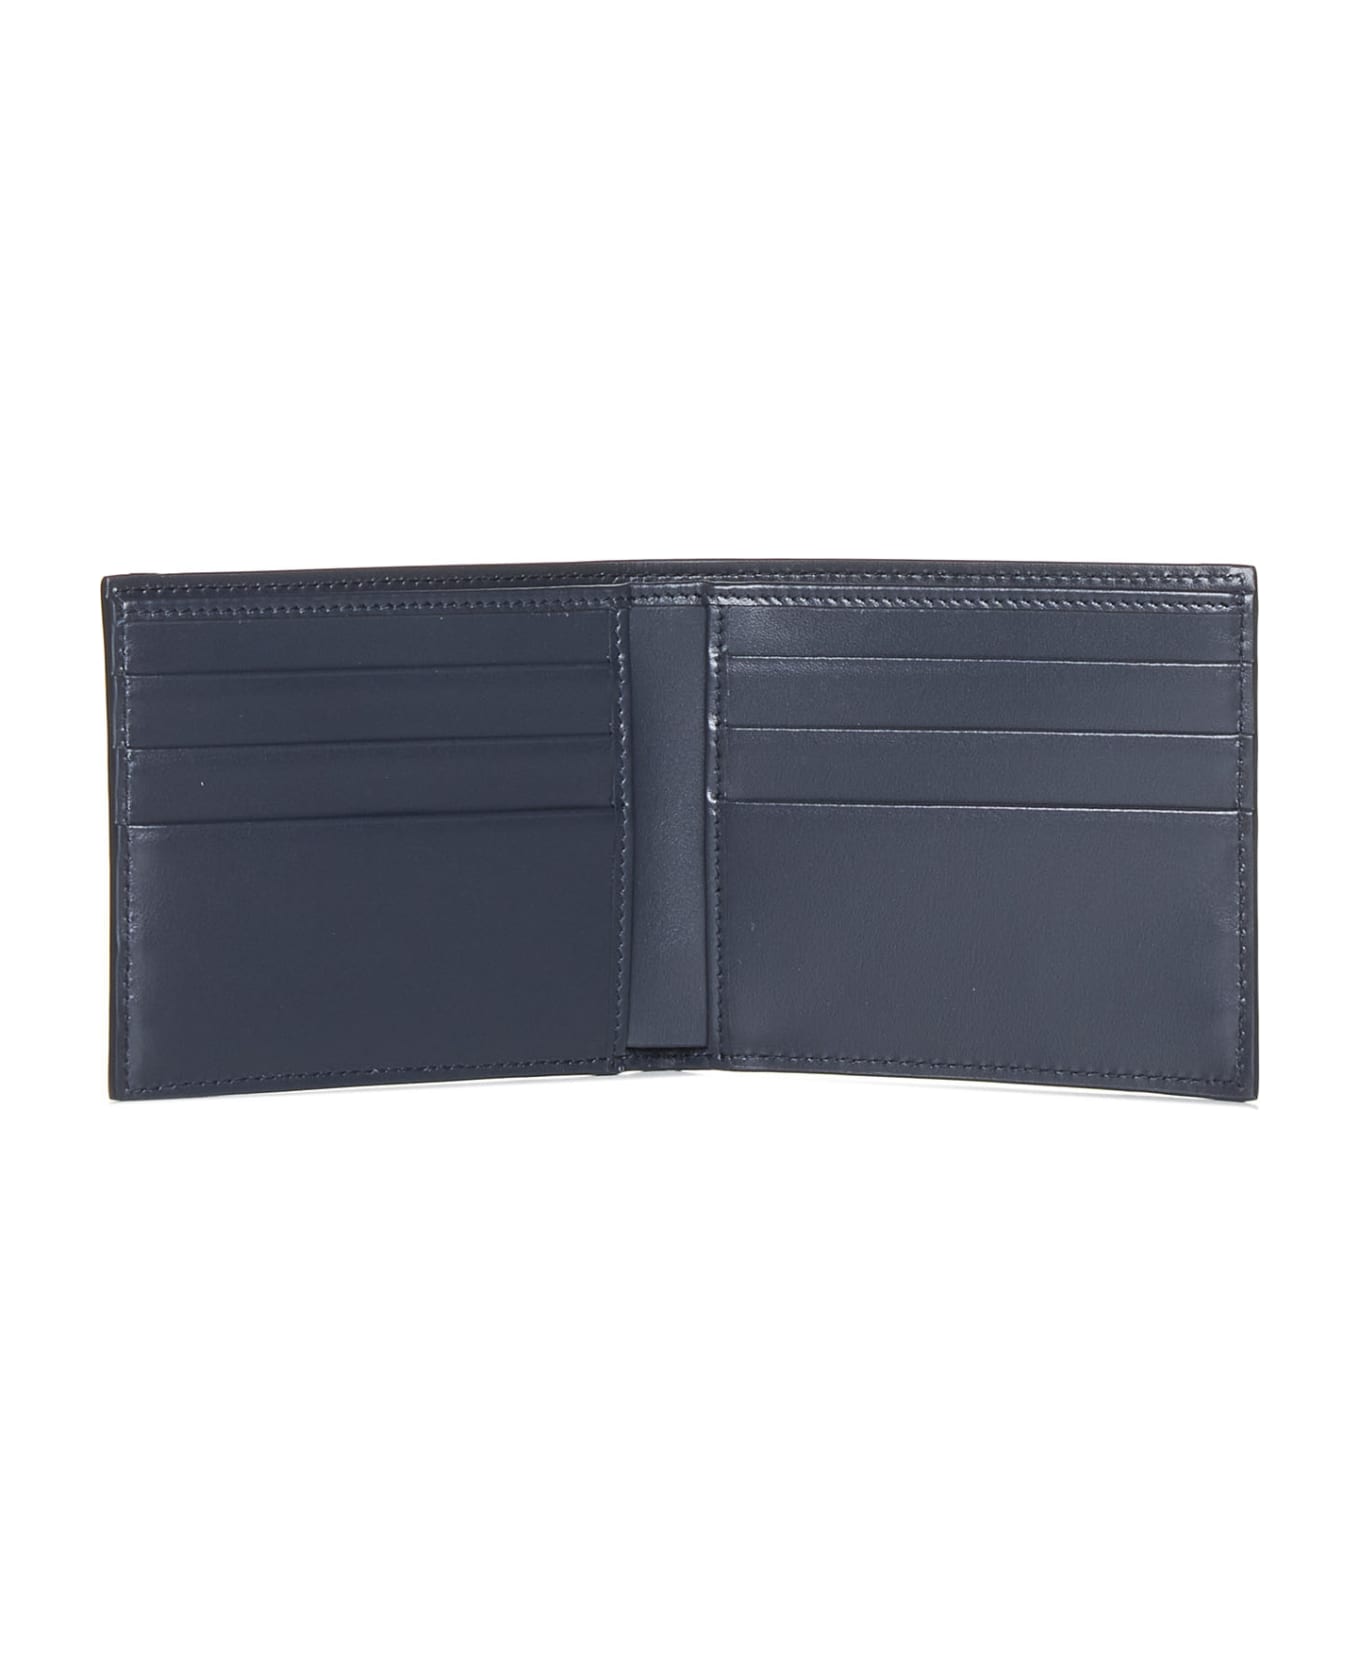 Dolce & Gabbana Bifold Wallet - blue 財布